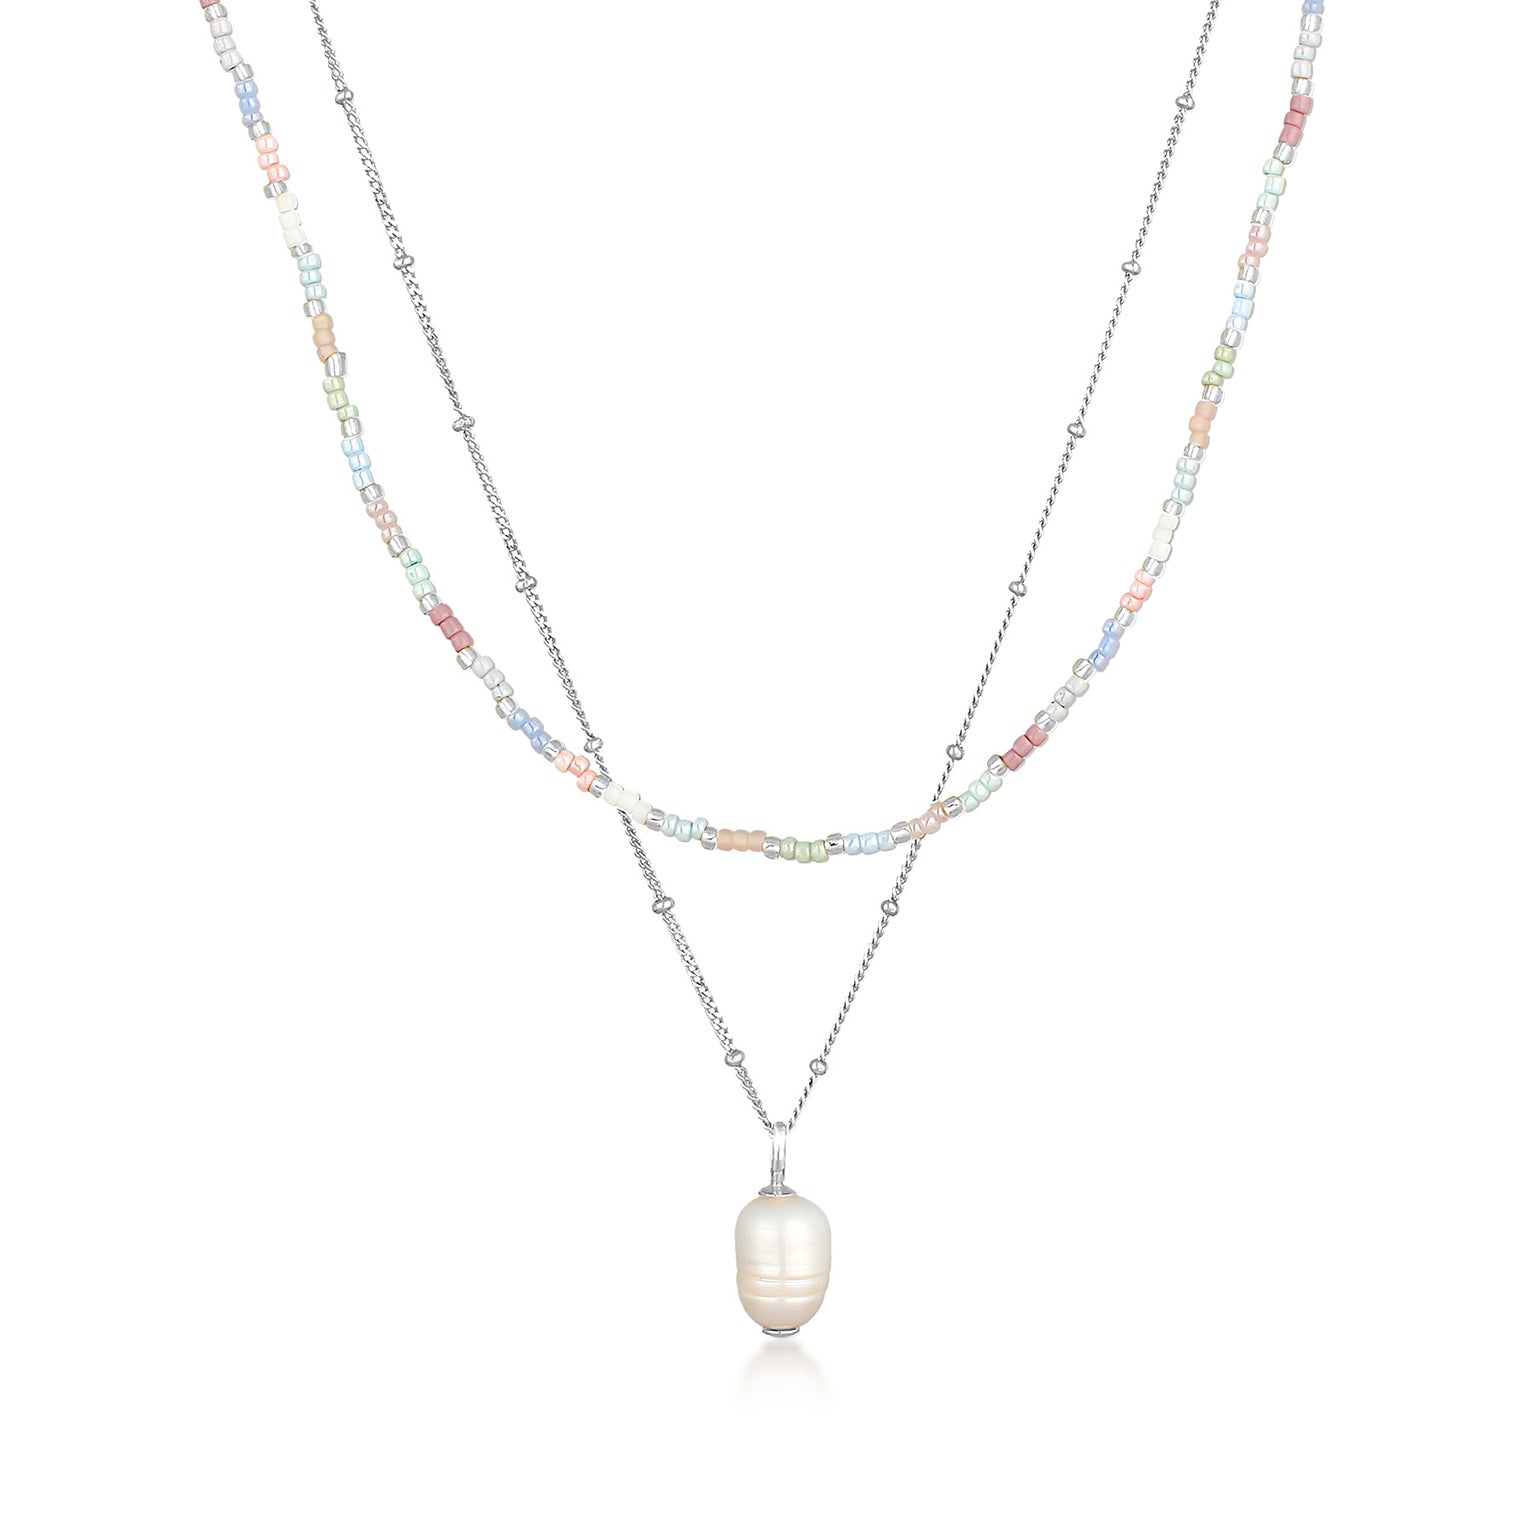 High quality, handmade necklaces | order from Elli – Elli Jewelry | Silberketten